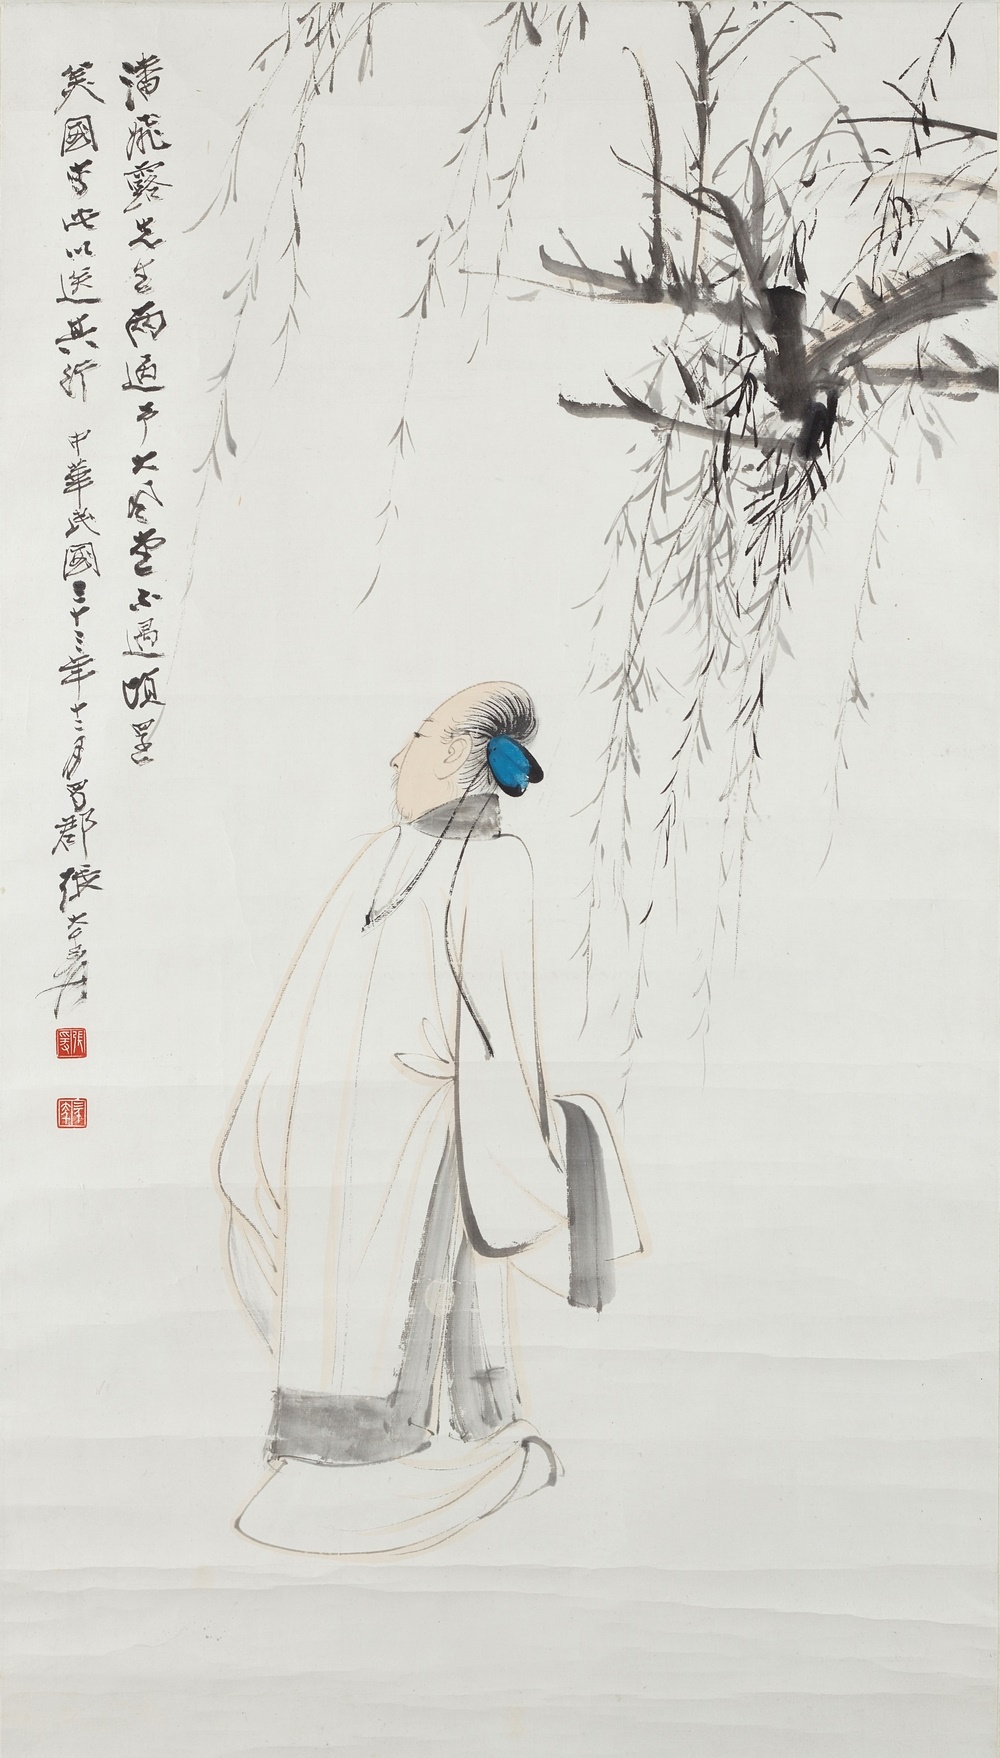 zhang daqian scholar under willow tree